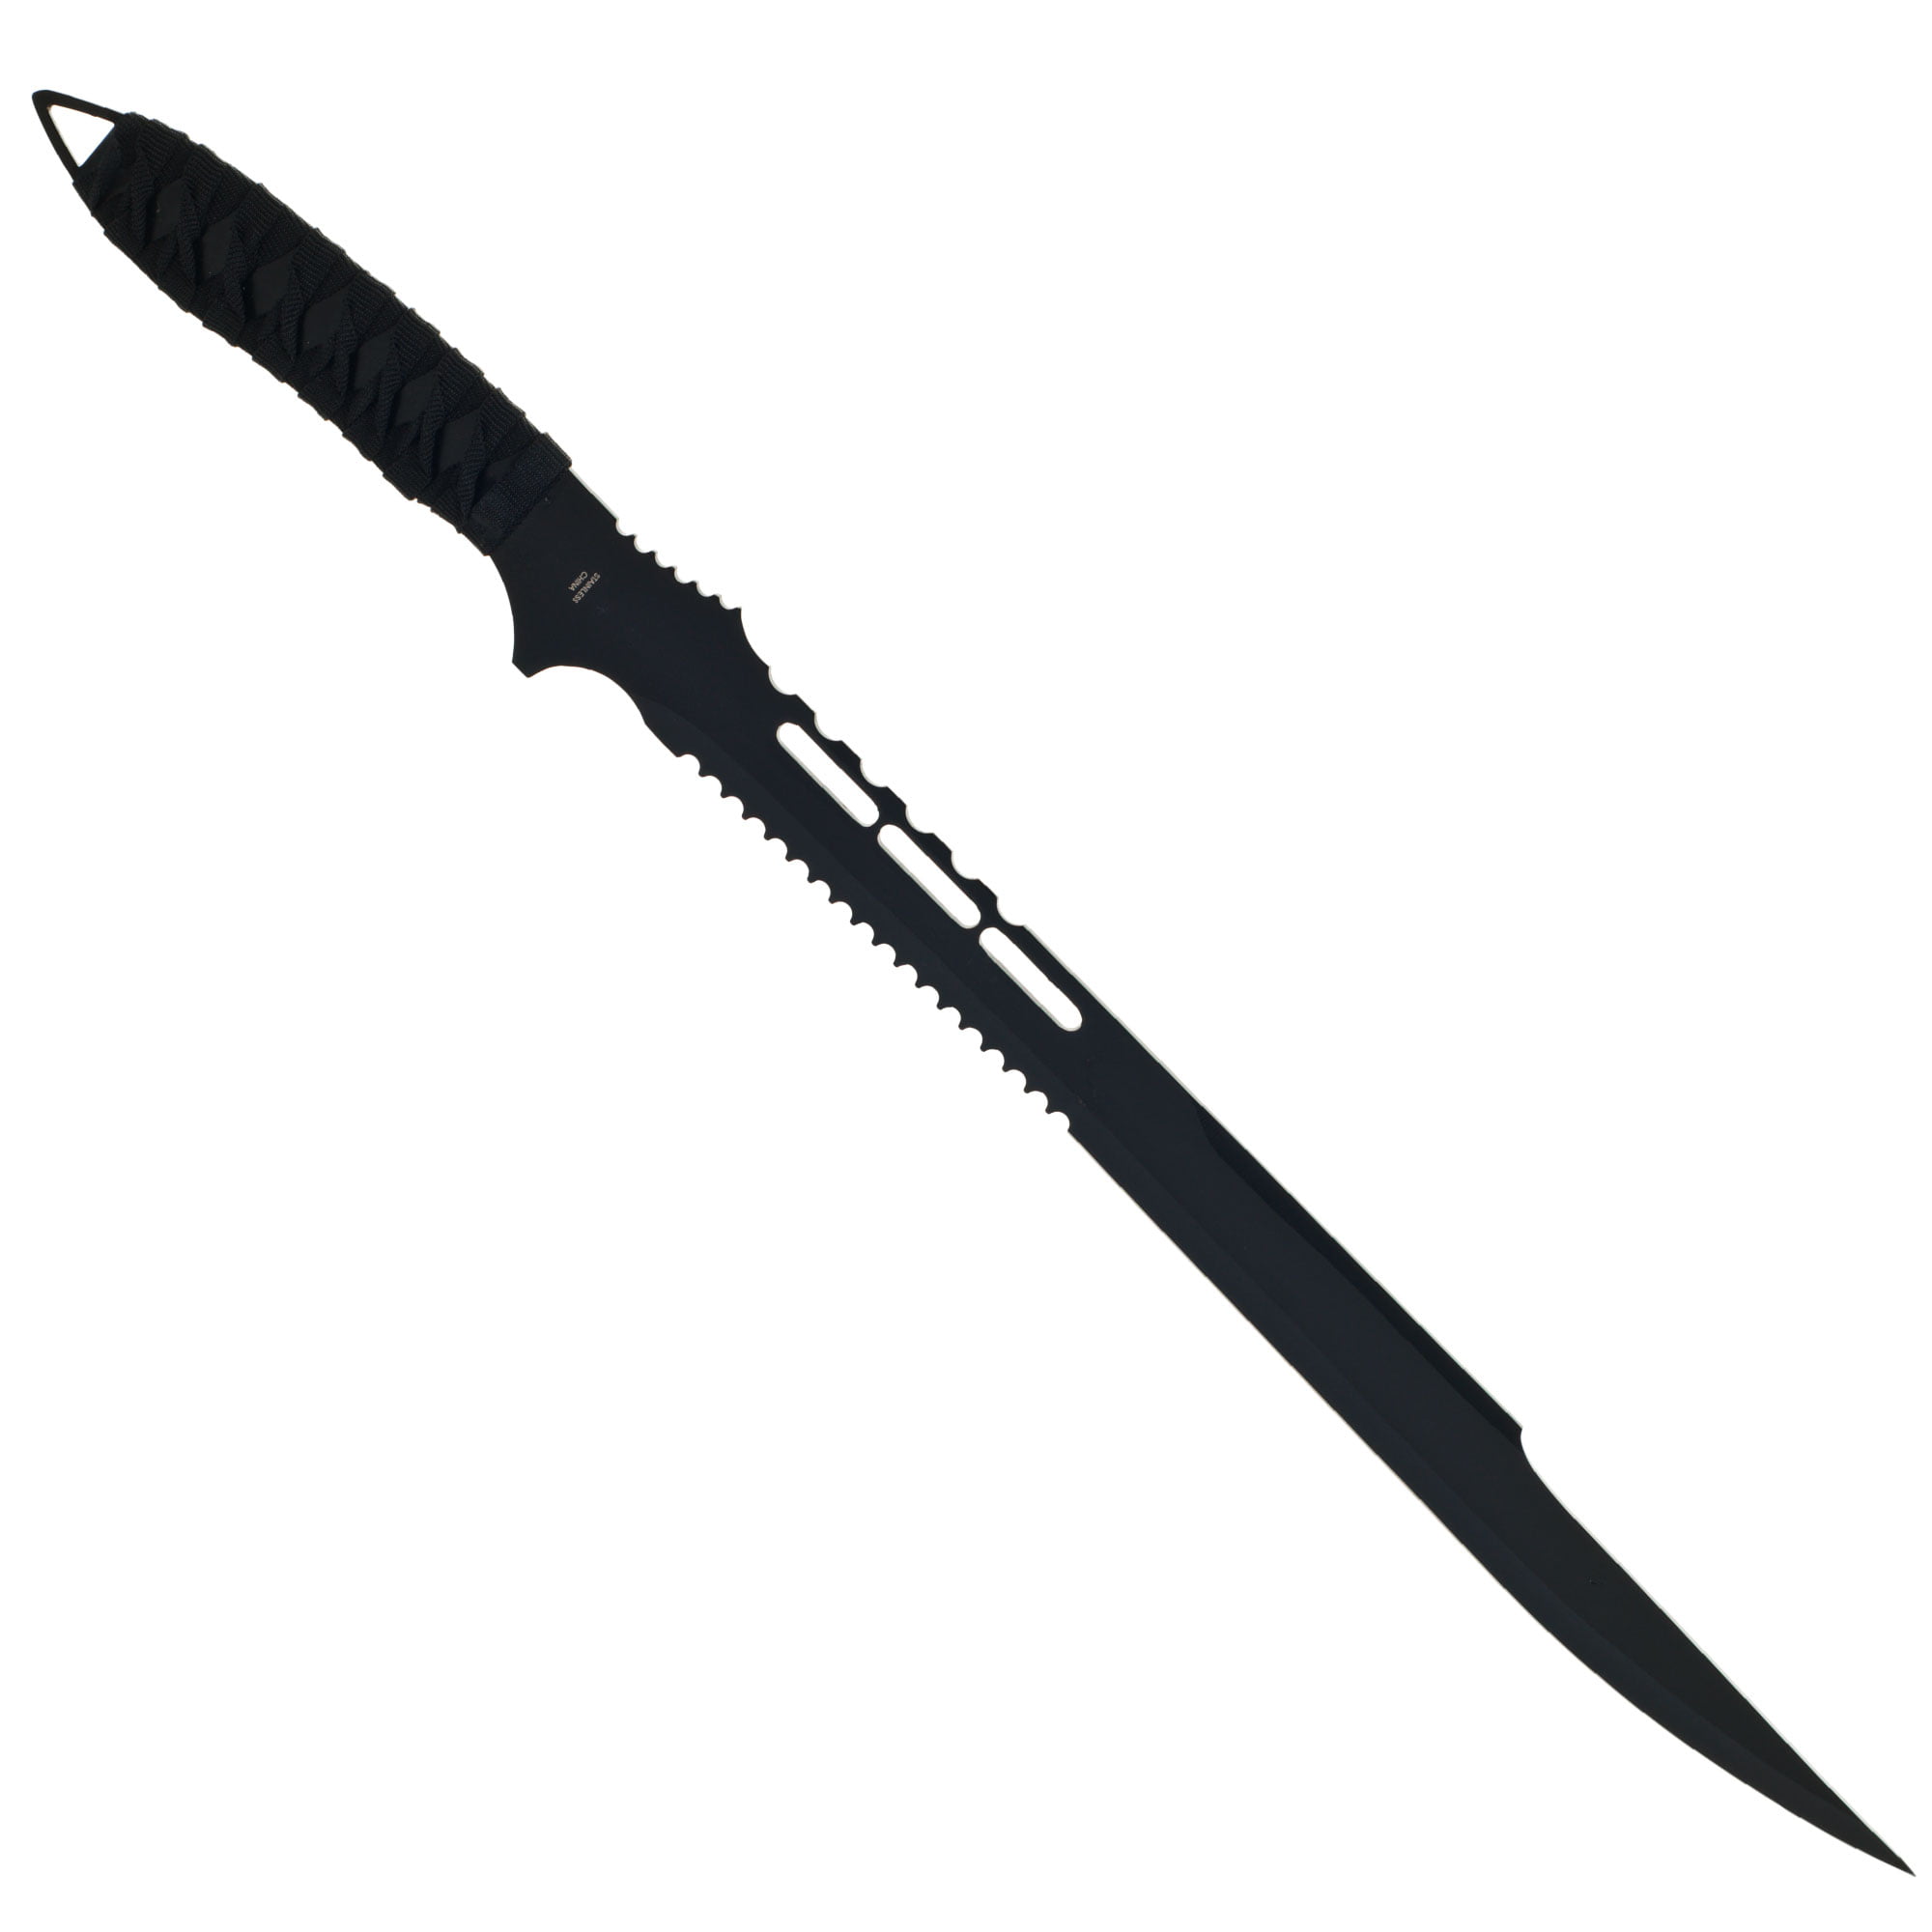 T 632119 27" Ninja Machete Black with Handle Arm Brace and Sheath 